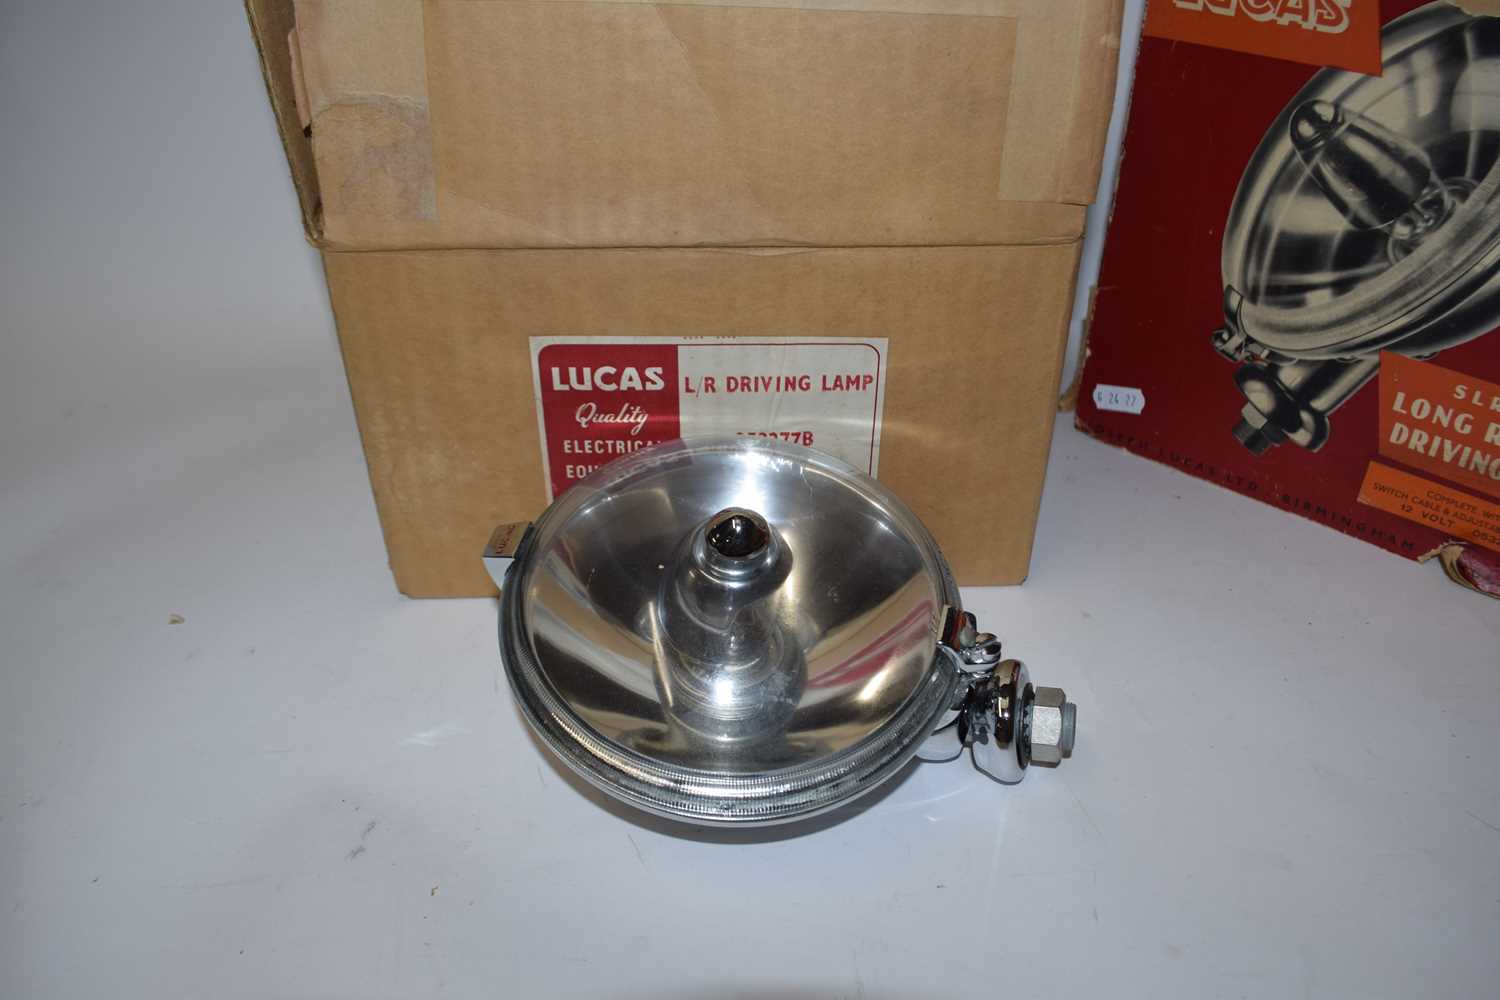 Lucas Long Range driving lamp SLR576 with original packaging